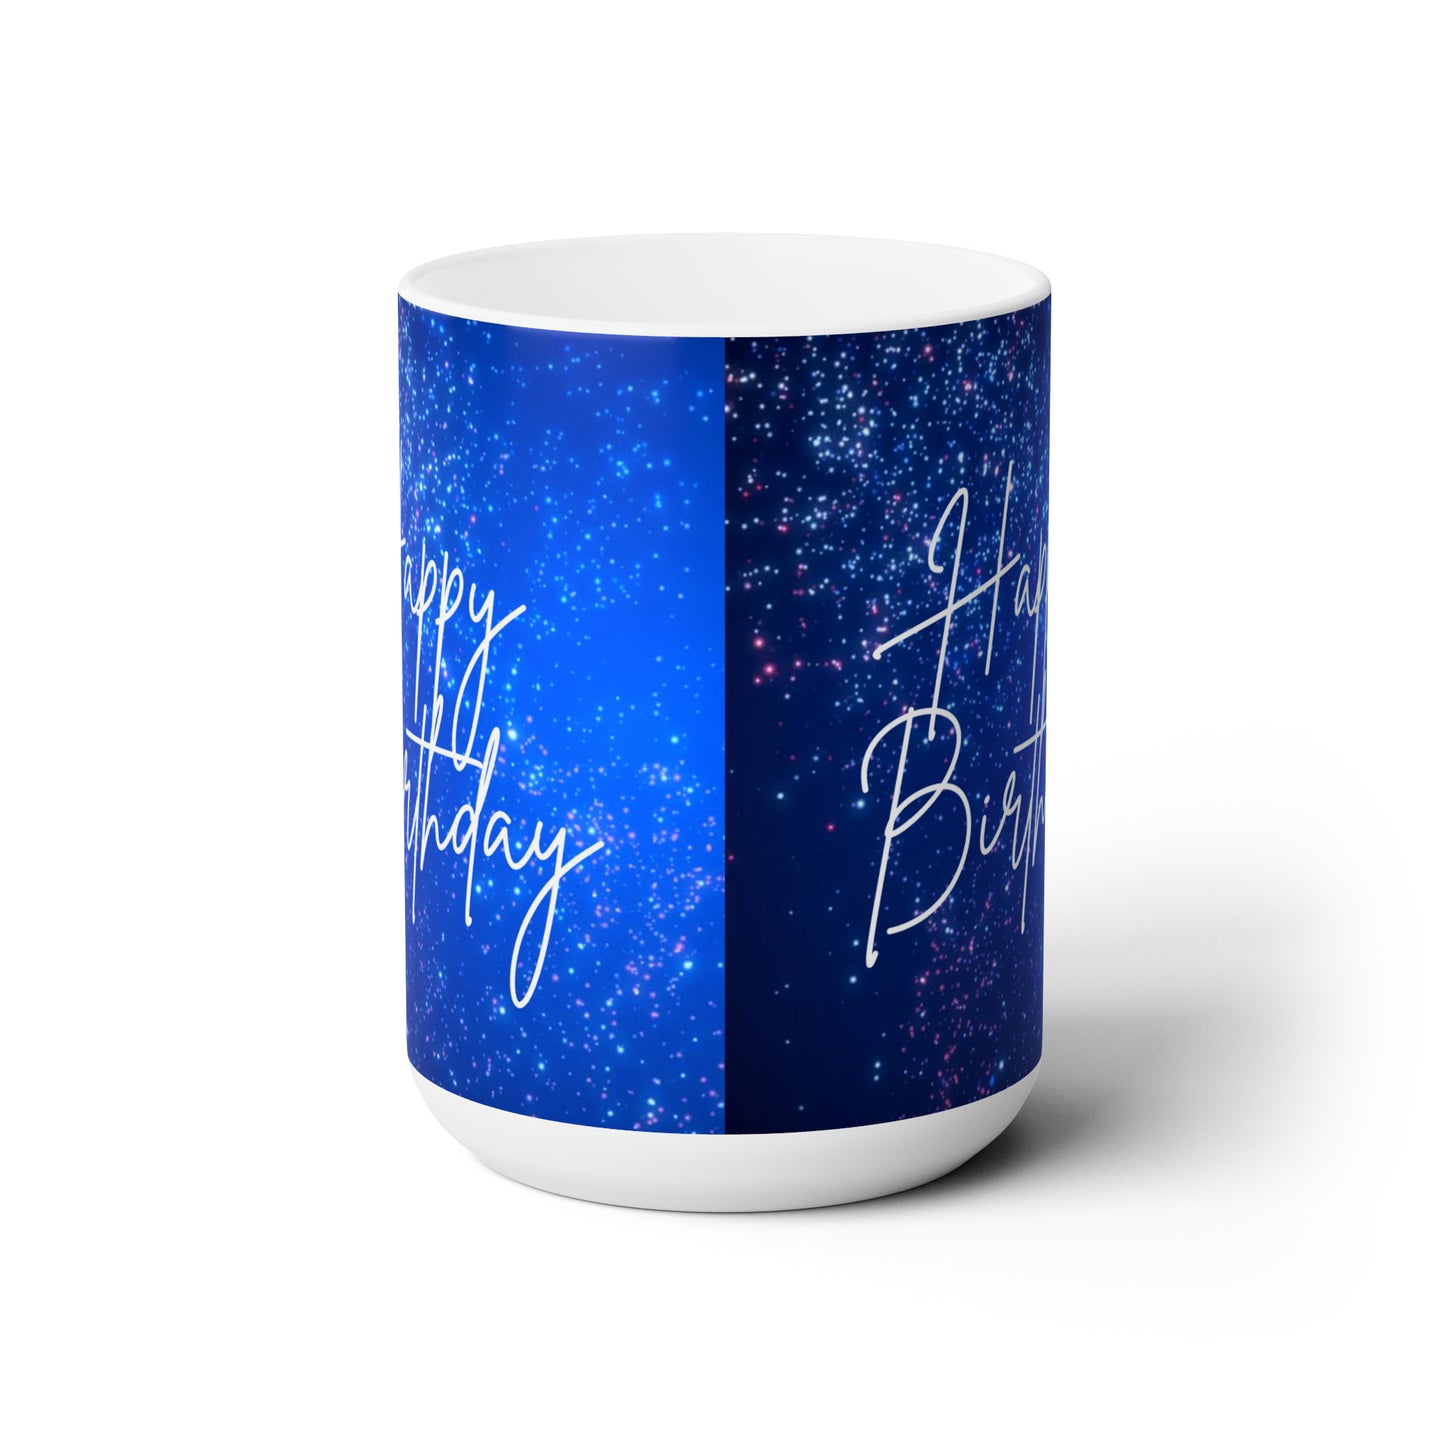 Happy Birtdhay Ceramic Coffee Mugs 15oz, Blue